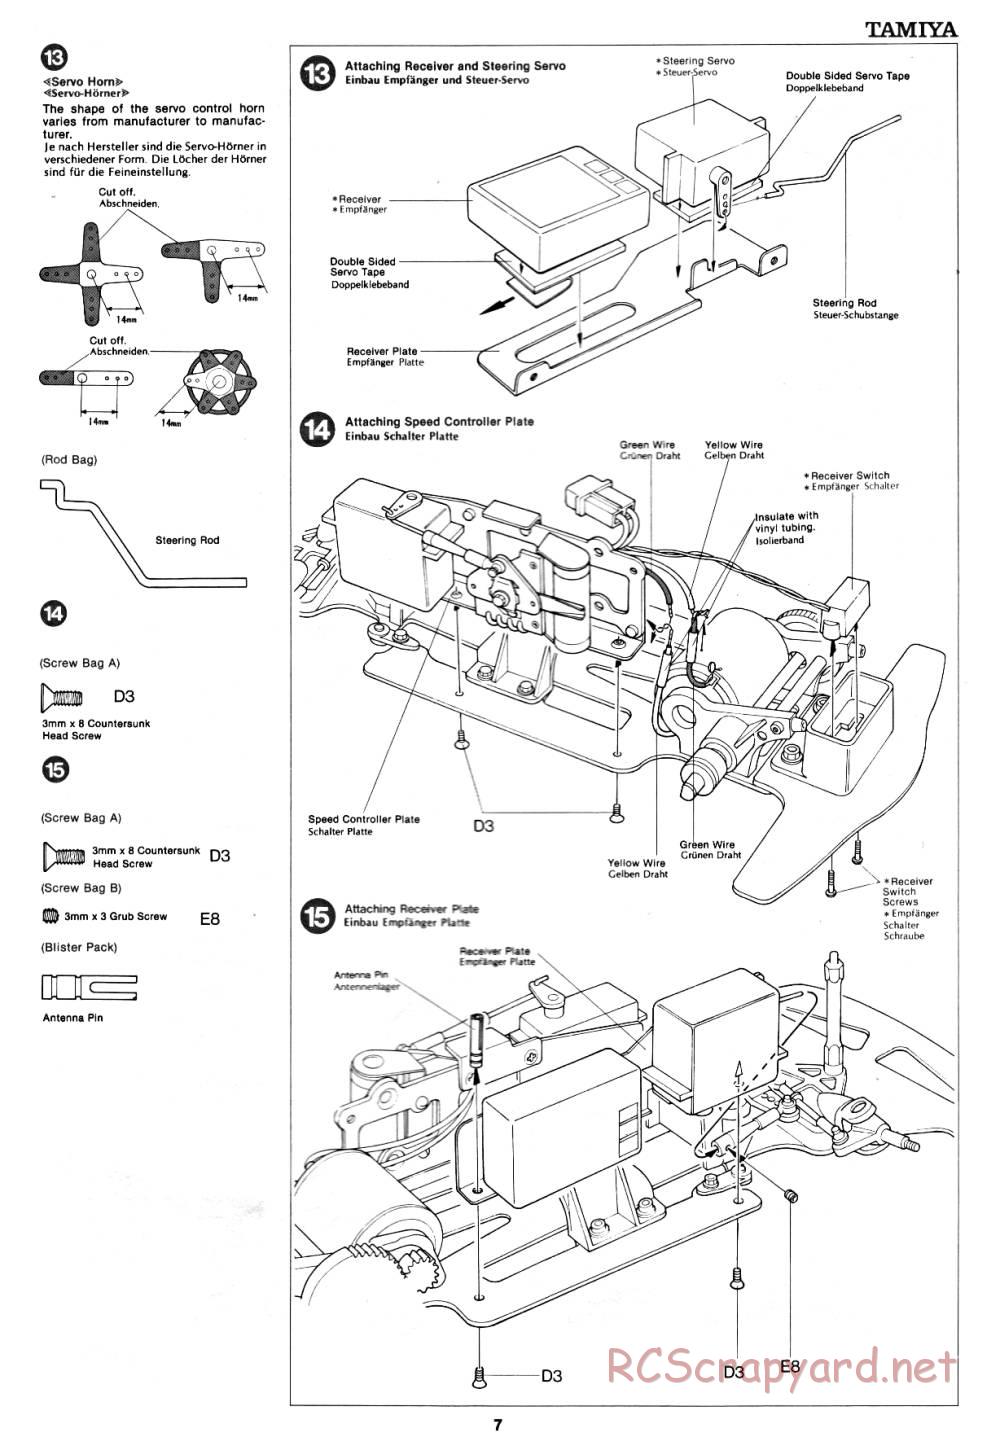 Tamiya - Datsun 280ZX - 58022 - Manual - Page 7